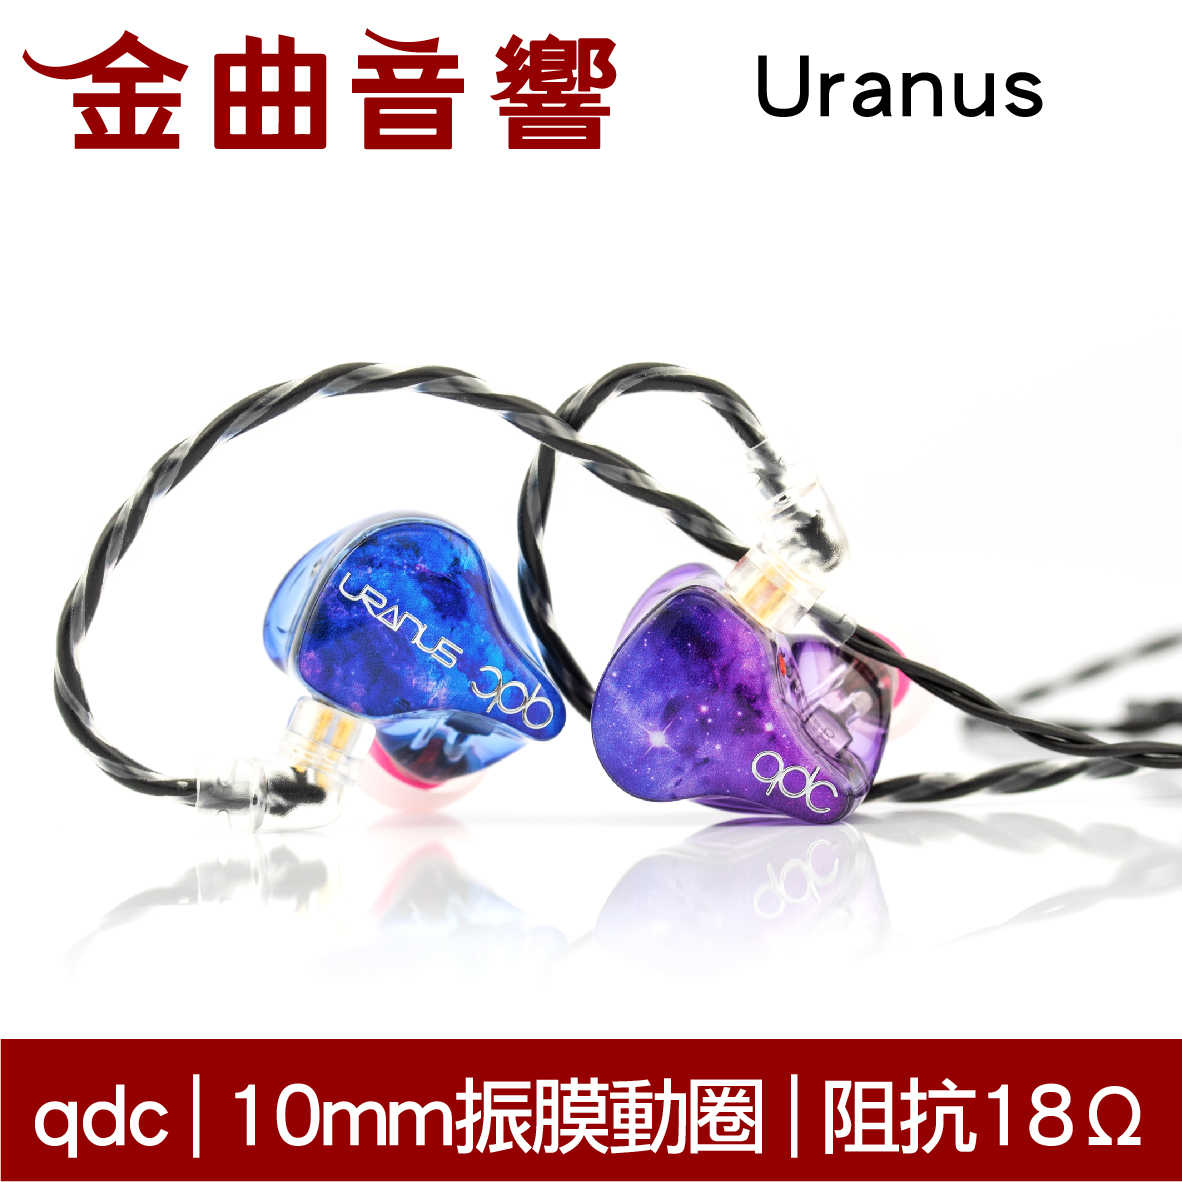 qdc URANUS 天王星 混合單元 低阻抗 高靈敏 降噪 耳道式 耳機 | 金曲音響